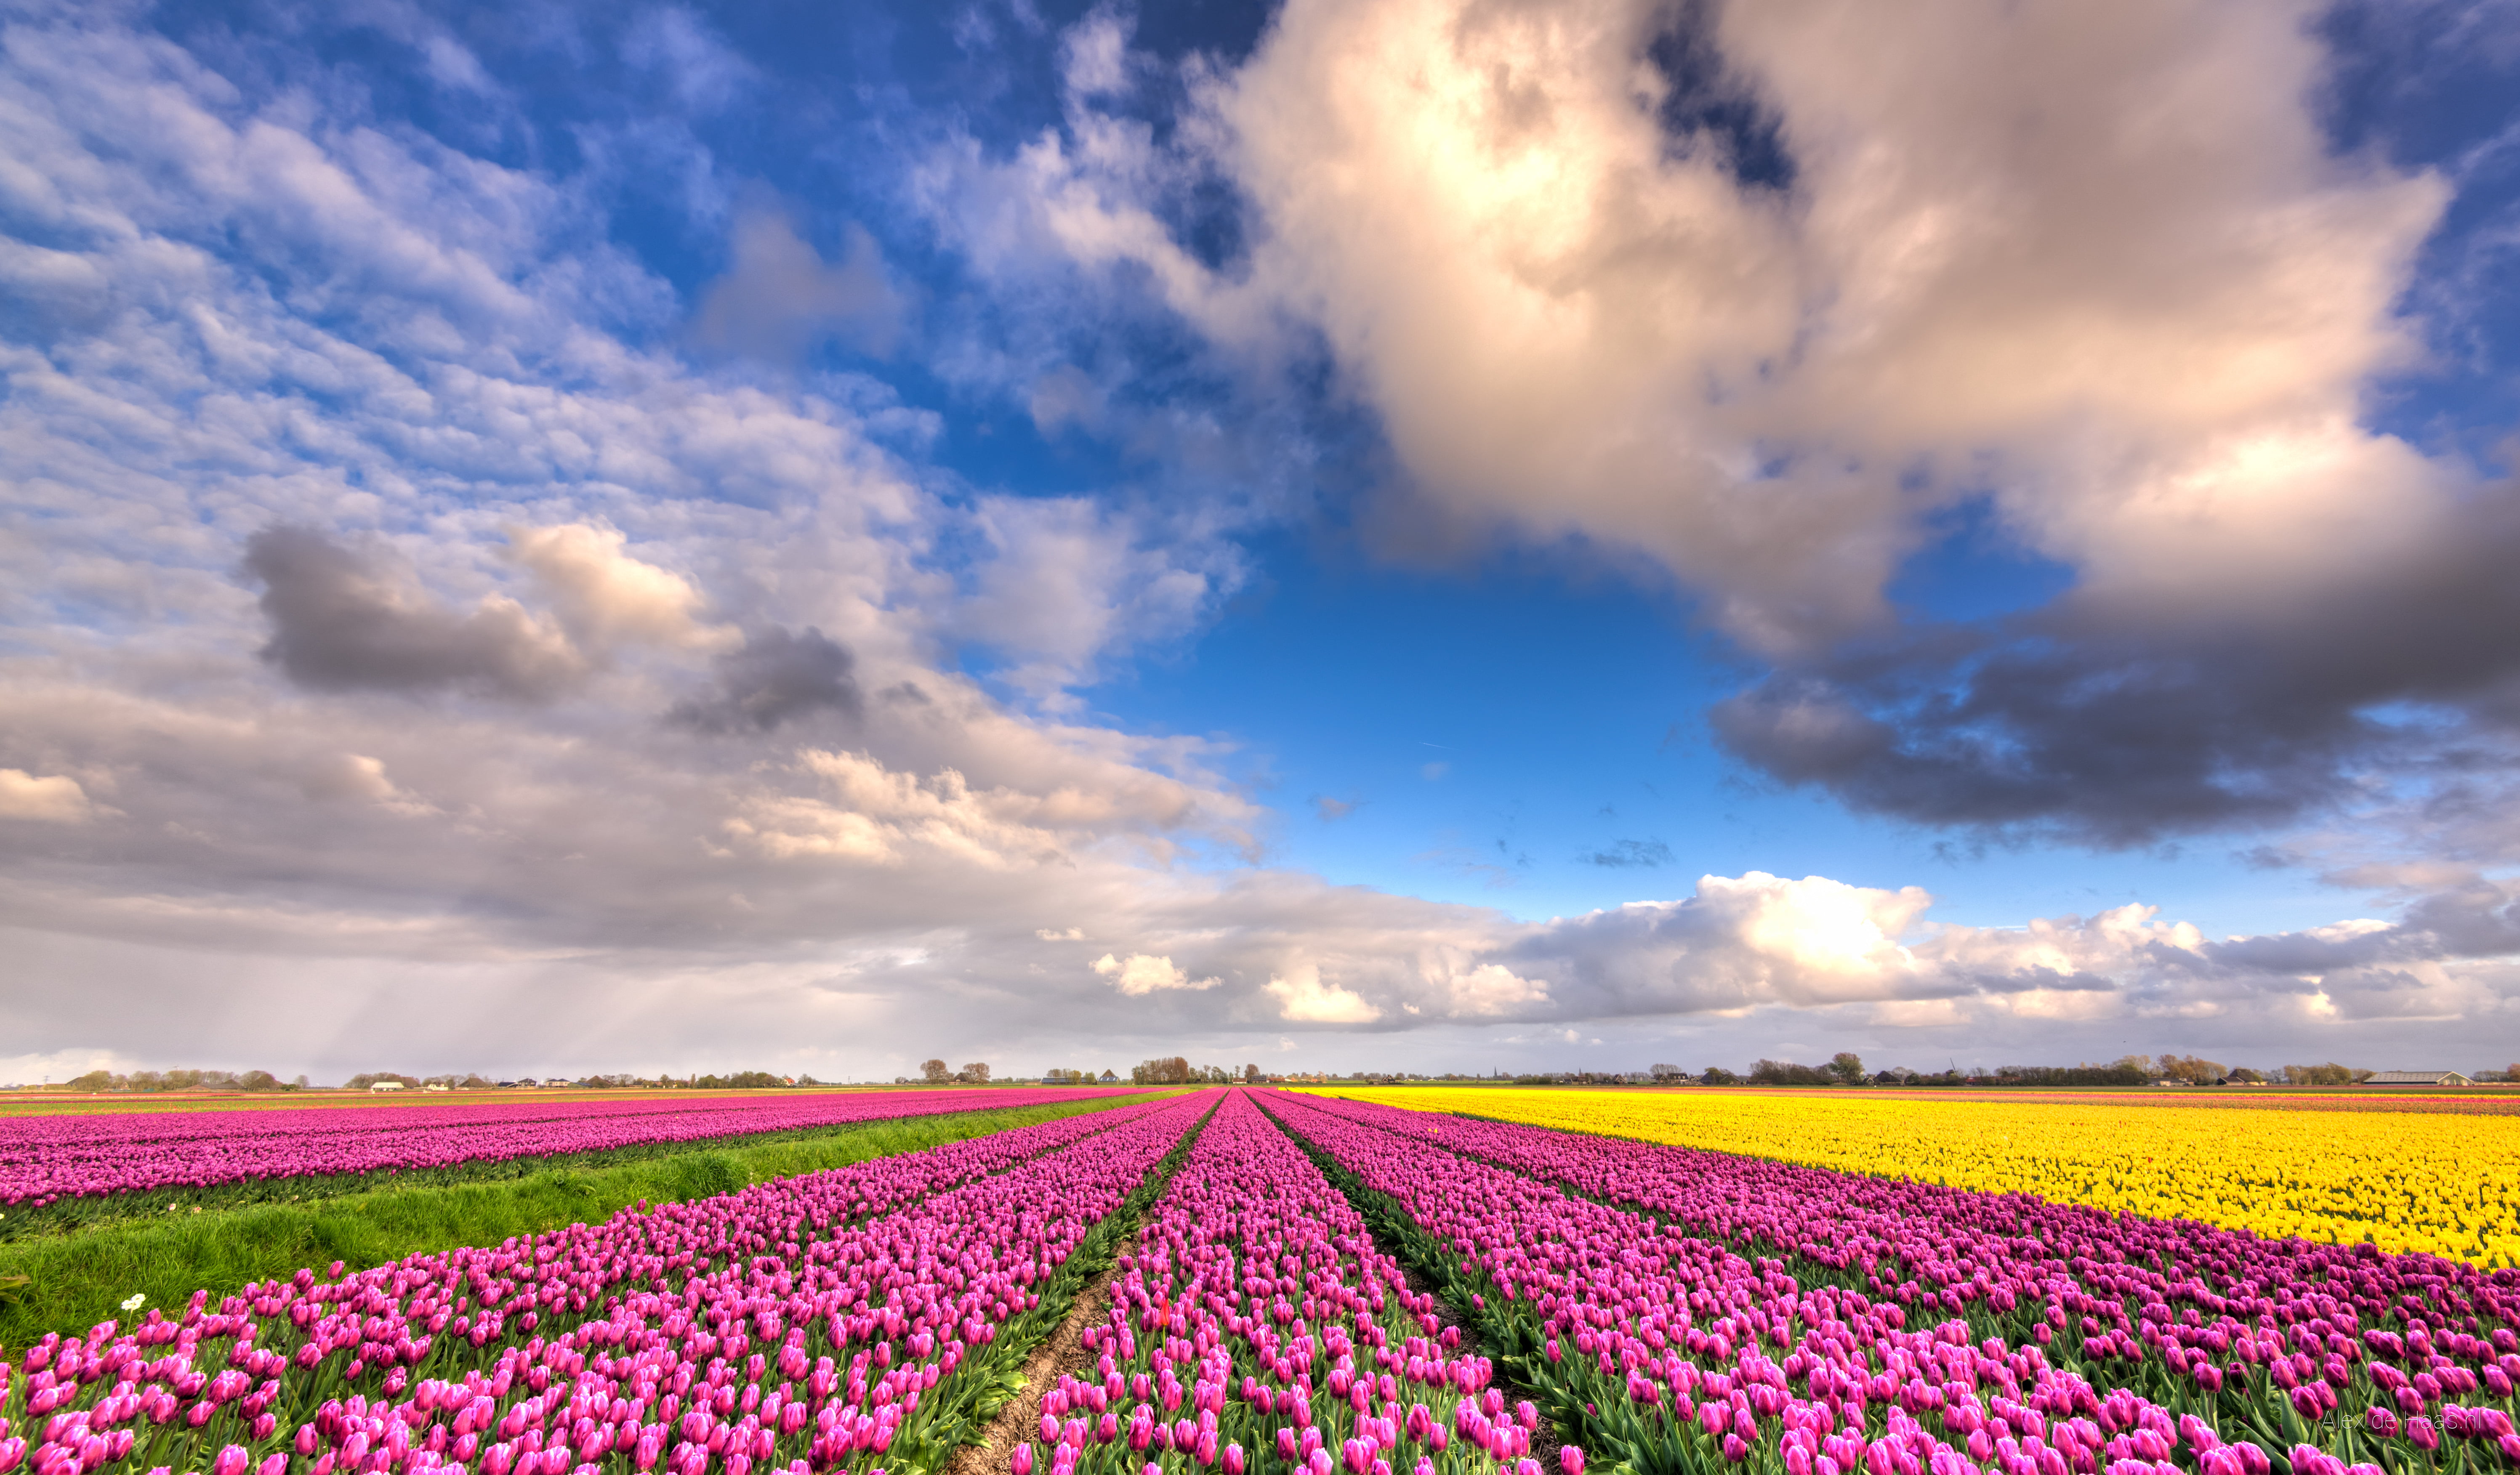 1125x2436 Resolution Pink Tulip Flower Field Under Blue Cloudy Sky During Daytime Plenty